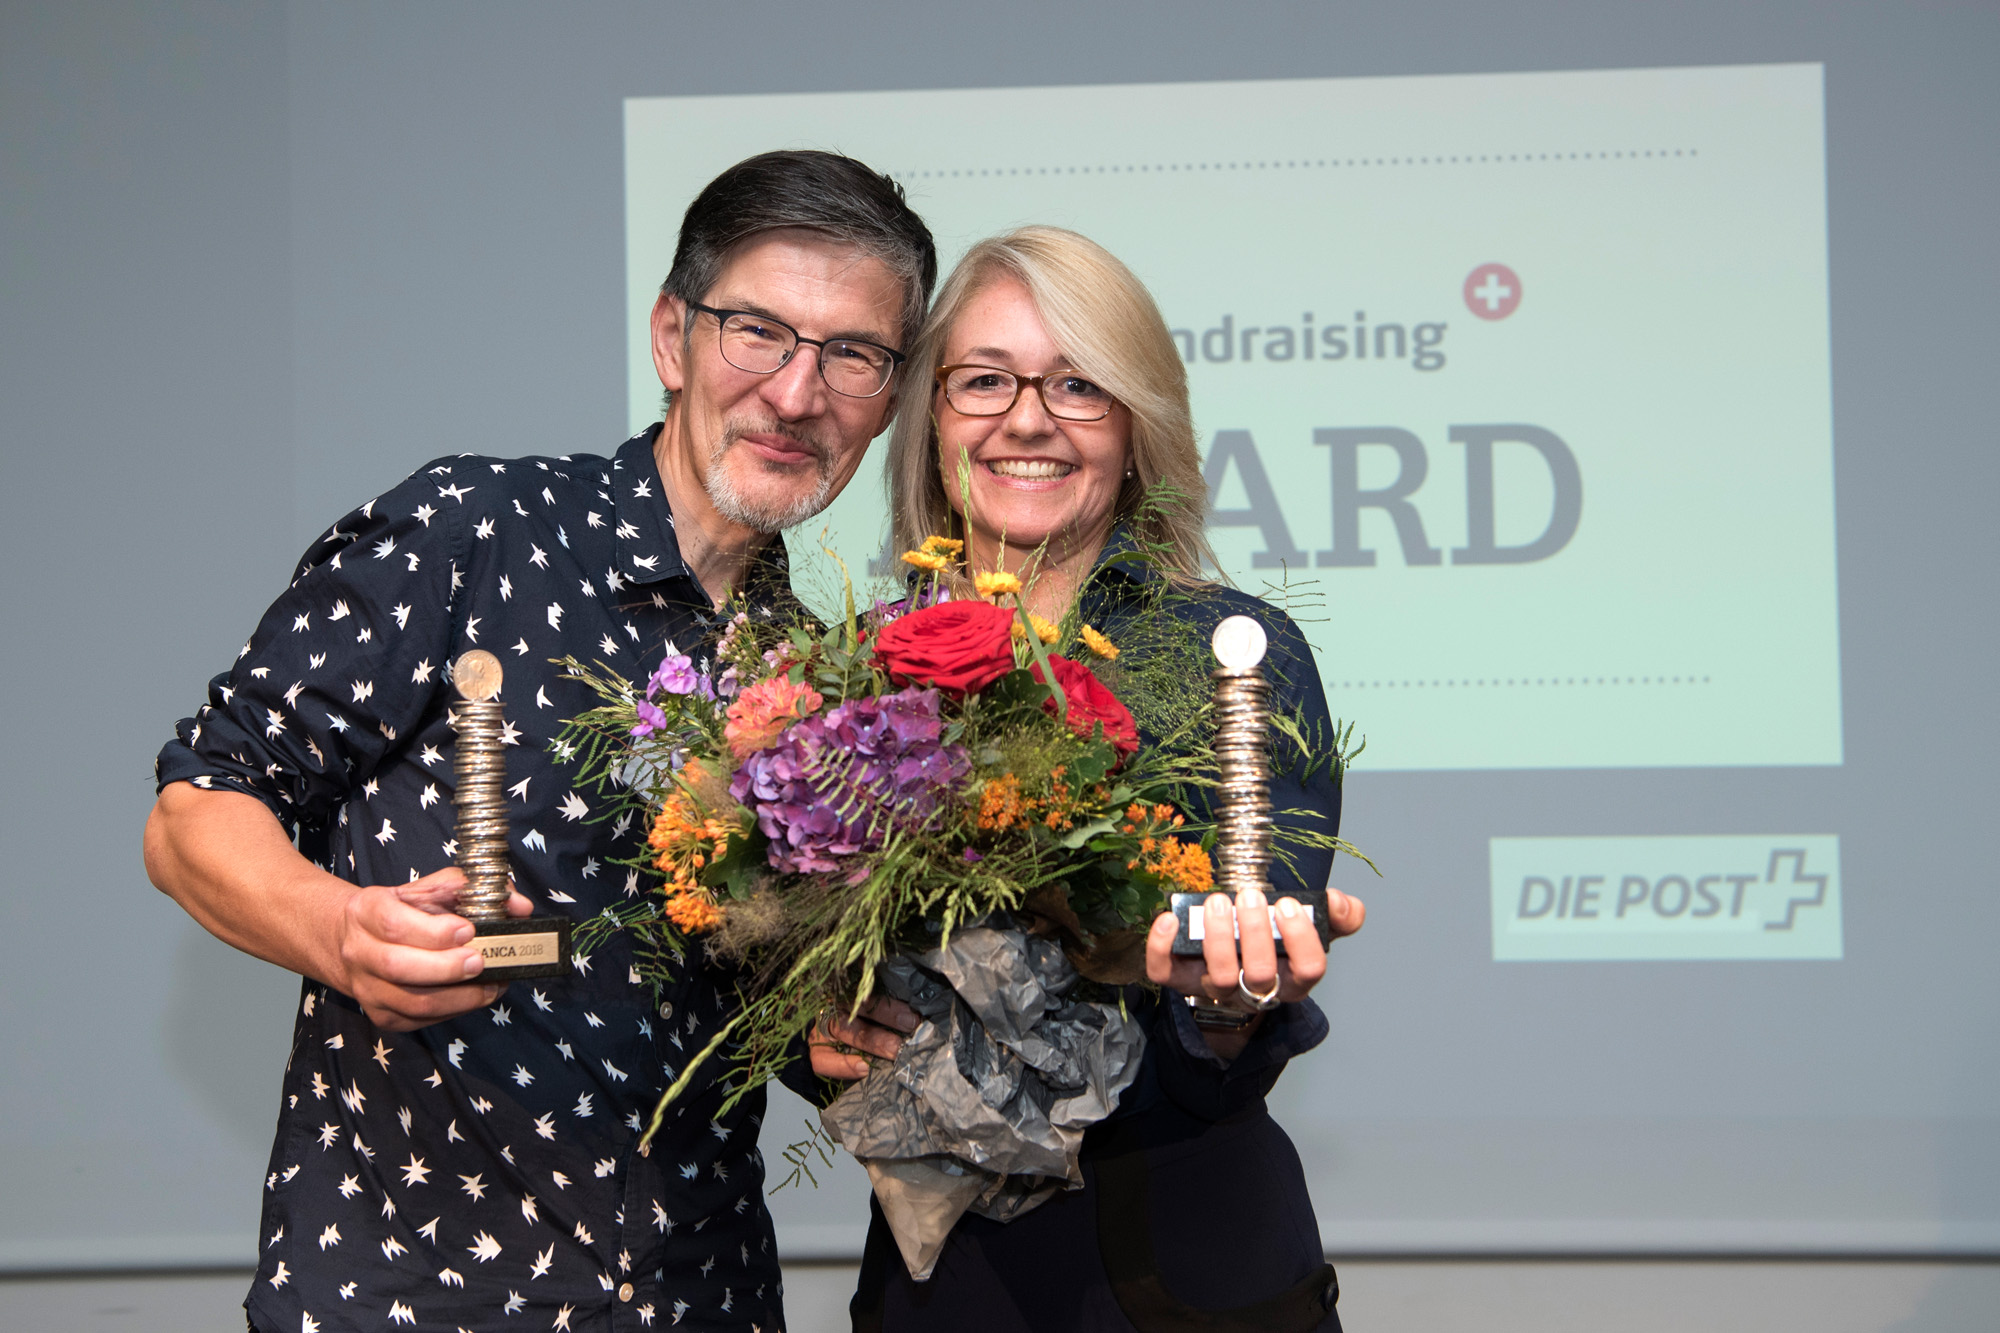 Rechts im Bild: Regula Muralt, Leiterin Kommunikation & Fundraising, nahm den Swissfundraising Award für die MS-Gesellschaft entgegen.